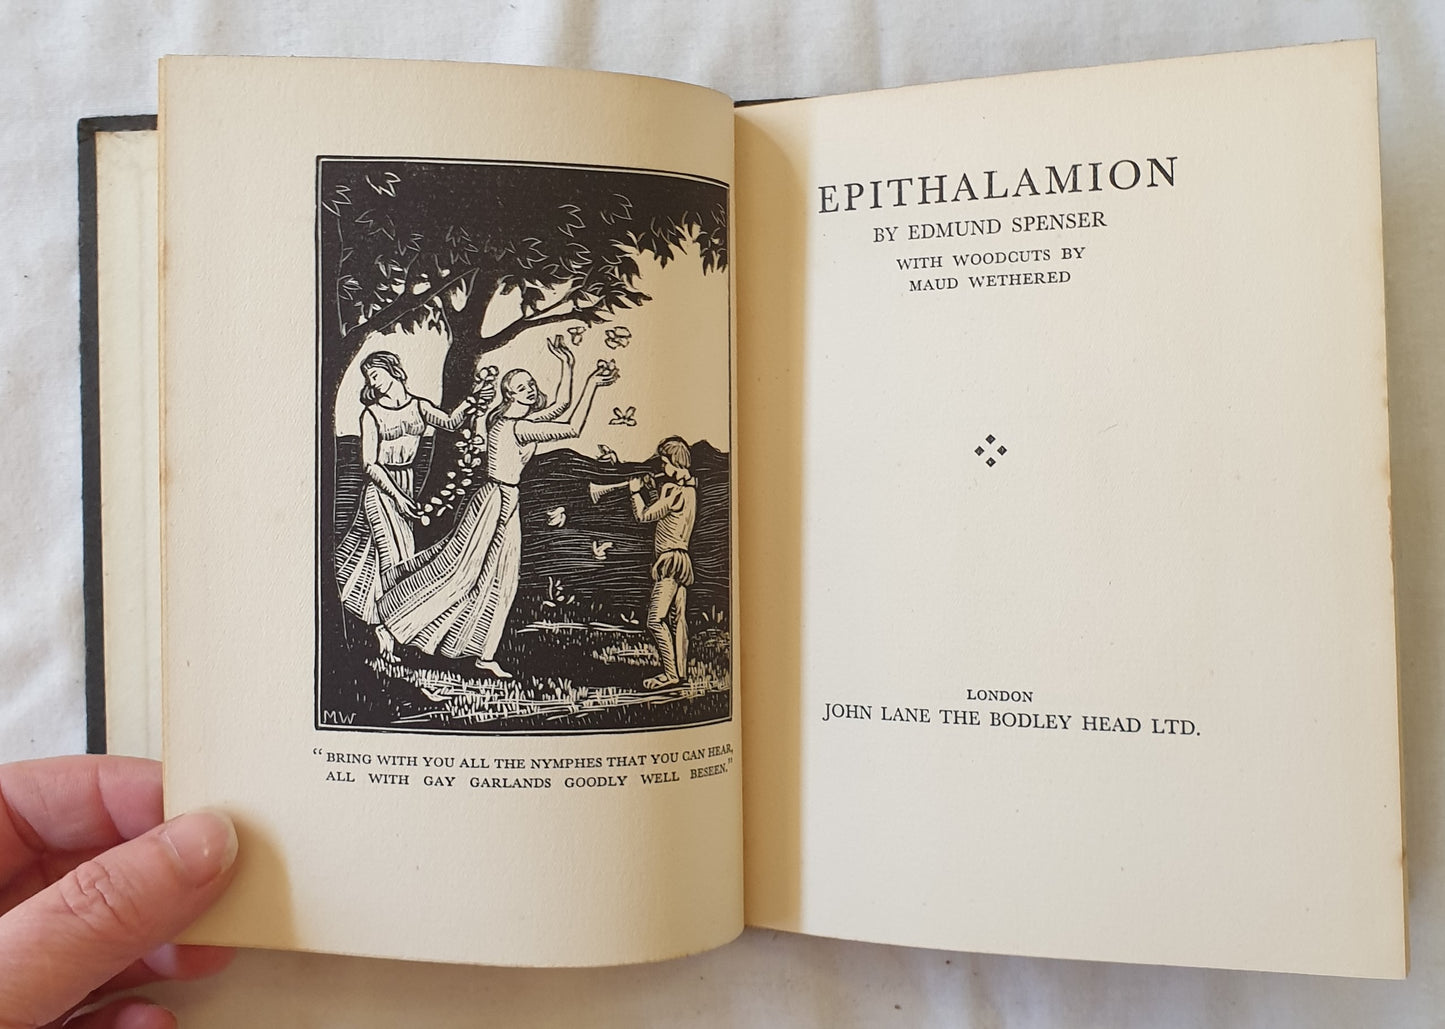 Epithalamion by Edmund Spenser